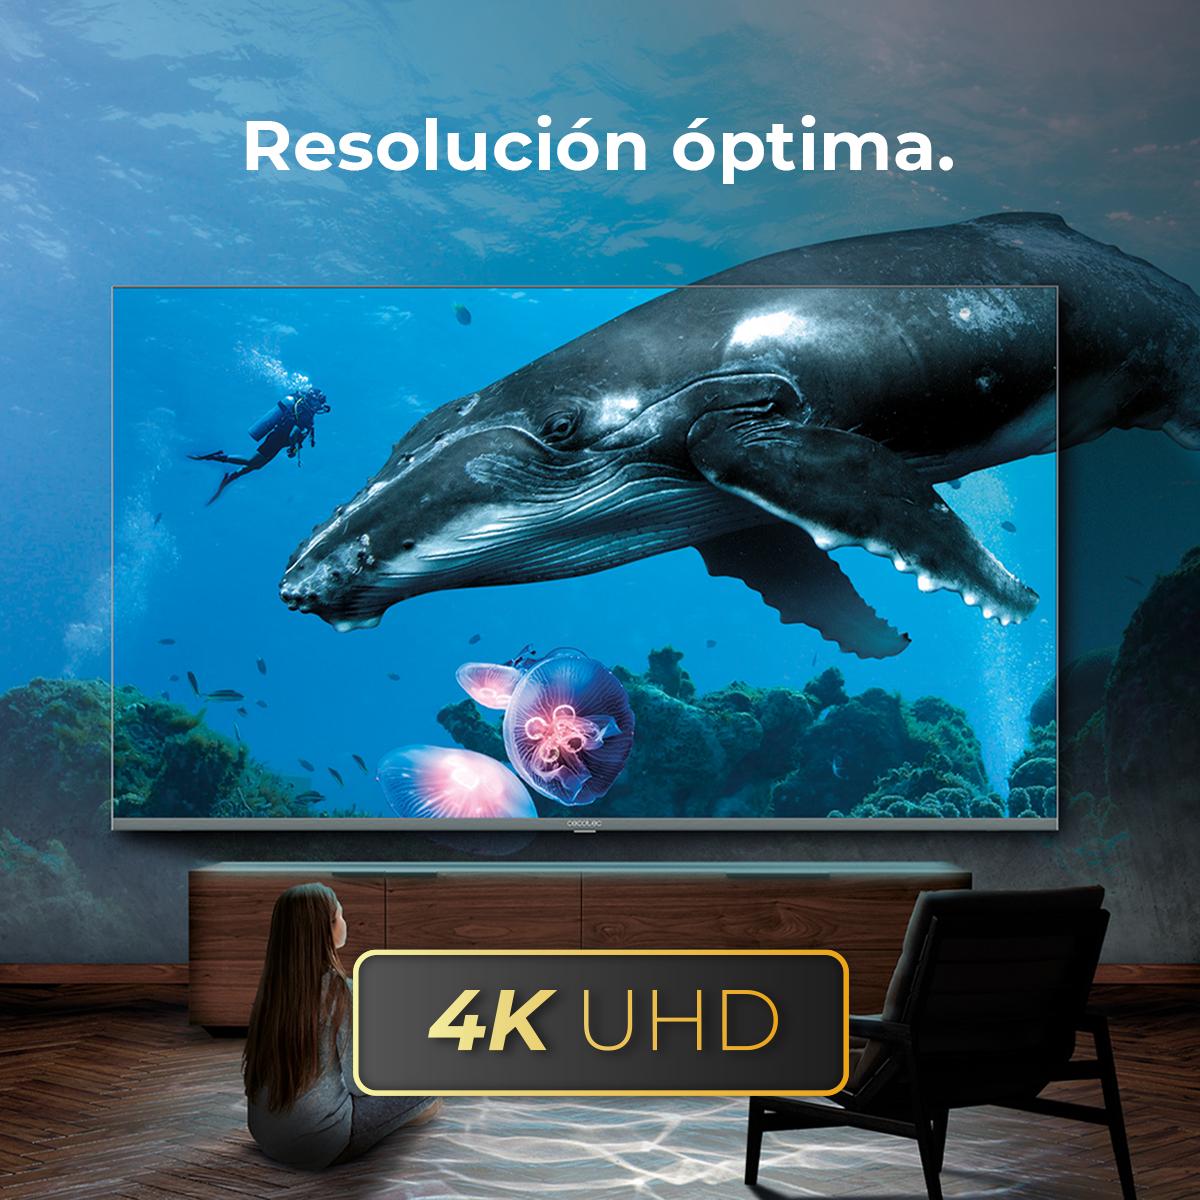 Cecotec Televisor LED 32 Smart TV A Series ALH00032NS. Resolución HD,  Android 11, Chromecast Integrado, Asistente de Voz, HDR10, HBBTV, Quad  Core, WiFi & Bluetooth, 2 Altavoces 6W, 2023 : : Electrónica